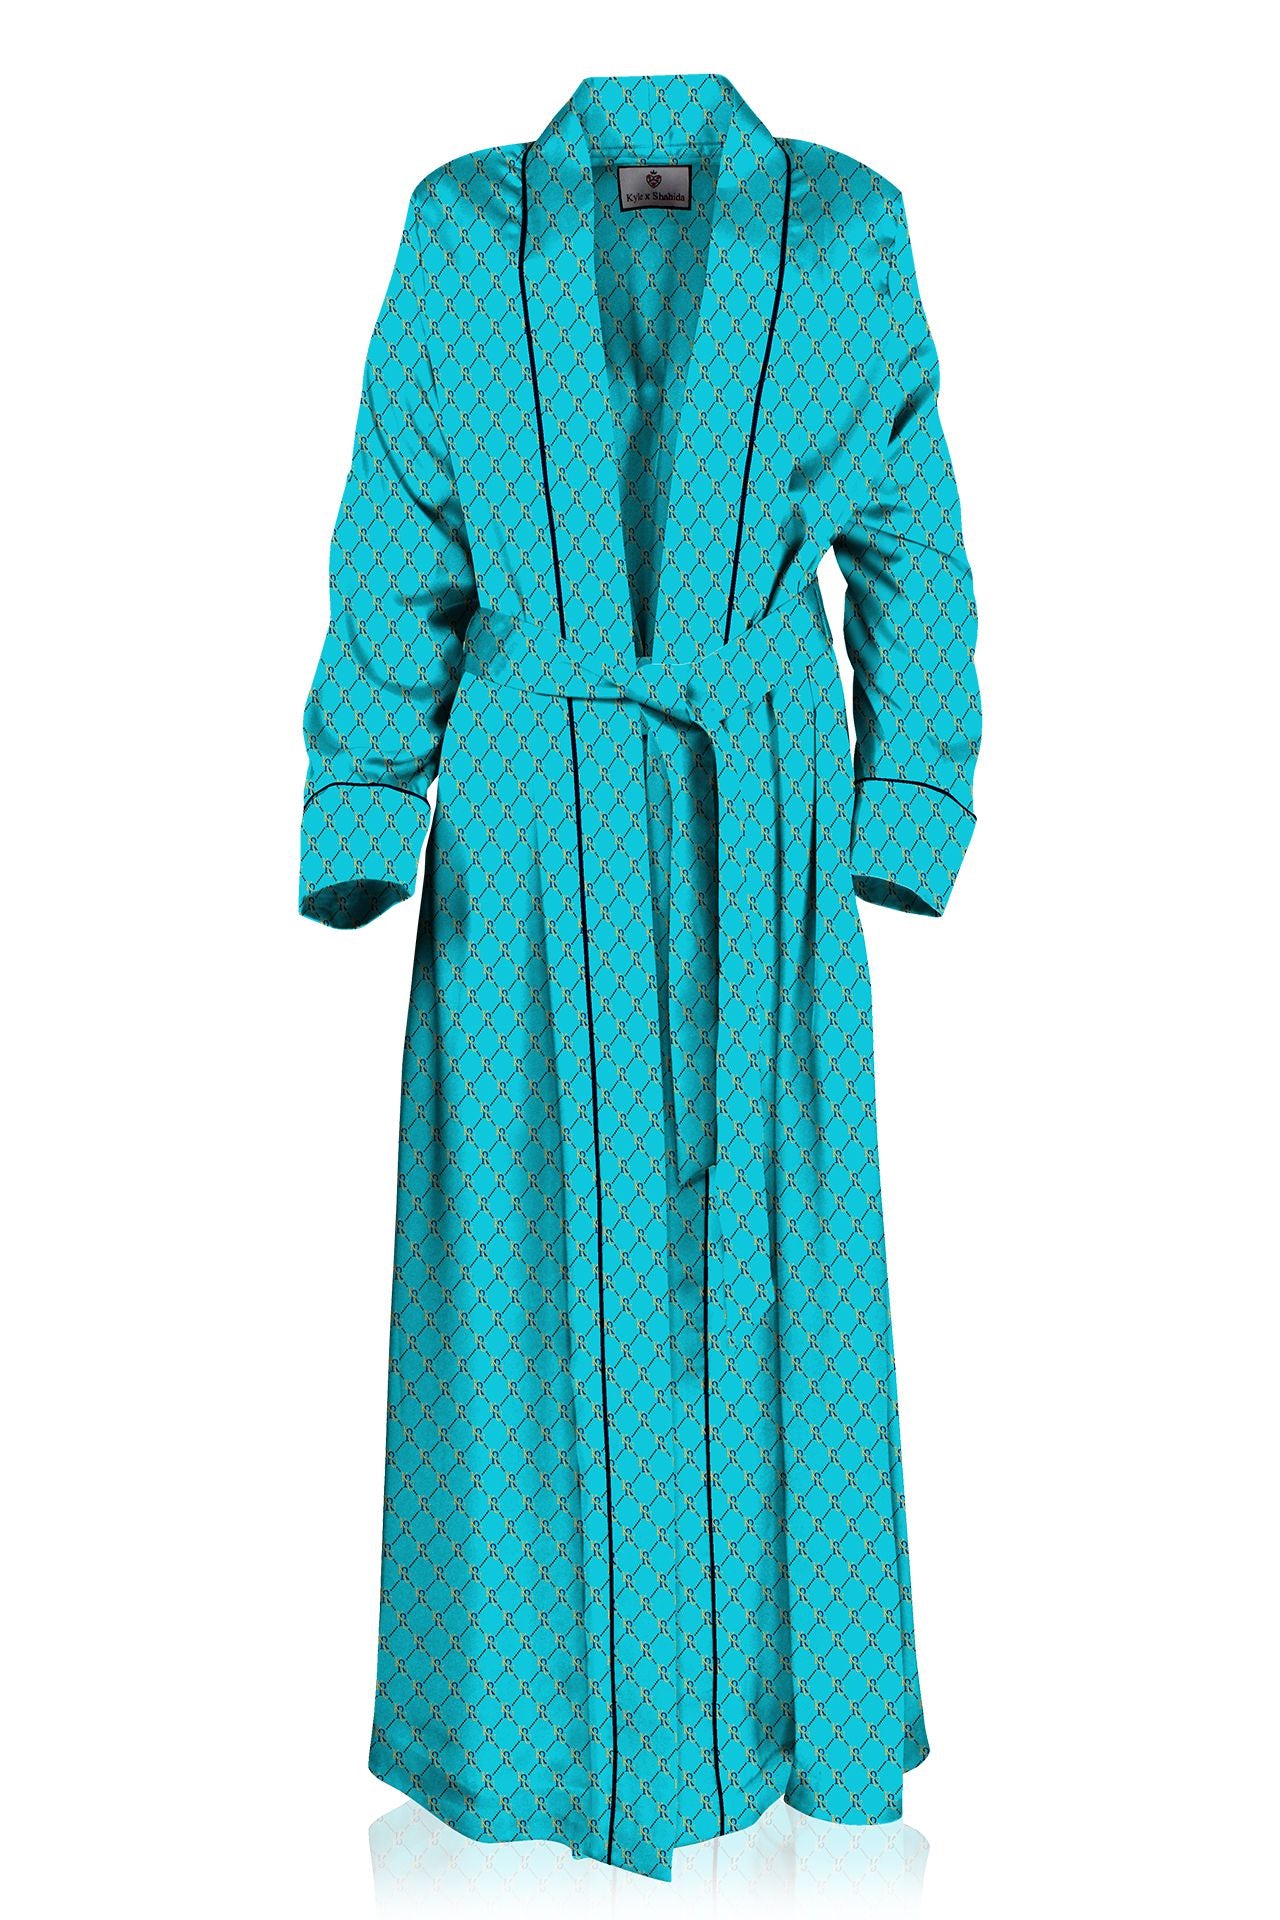 "womens kimono robes" "woman in silk robe" "Kyle X Shahida" "washable silk robe"